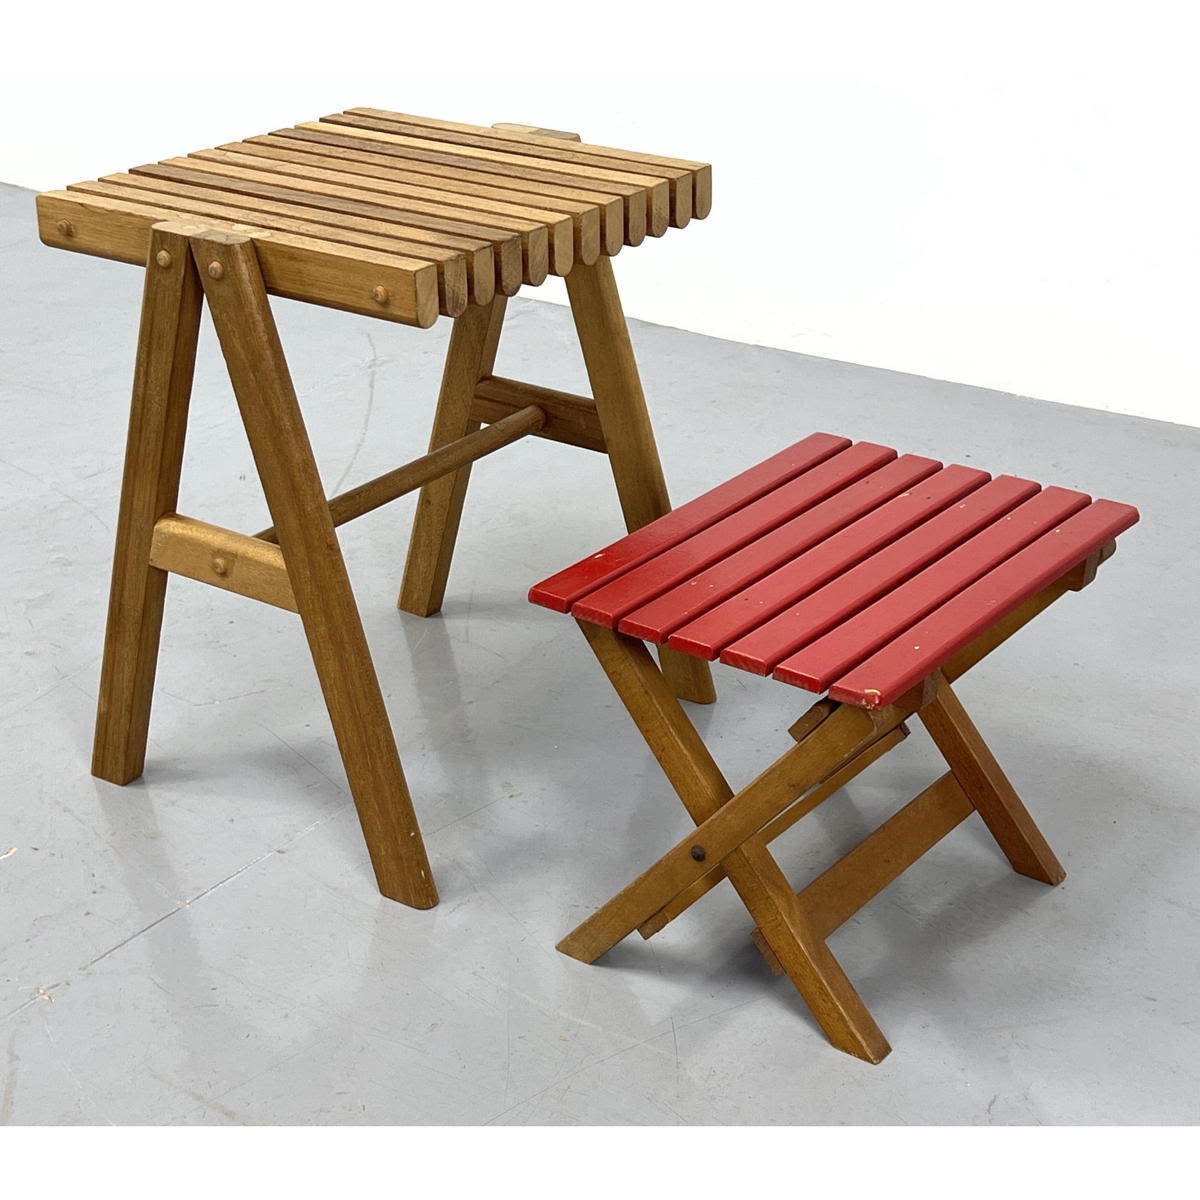 2 Small Slat Tables 

Dimensions: